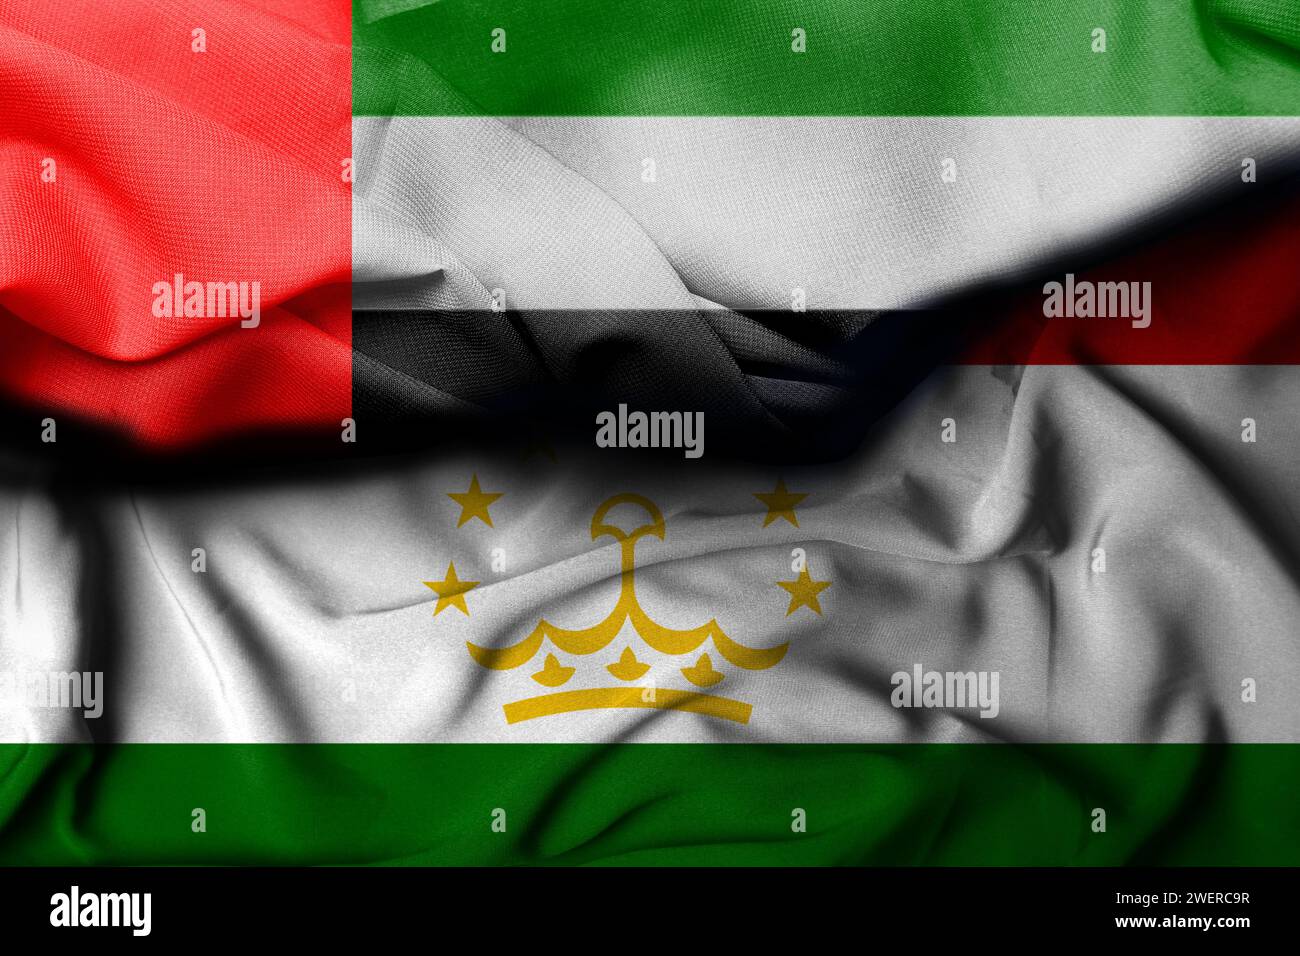 Illustration of the united arab emirates flag combining the tajikistan flag, decoration background. 3d illustrations Stock Photo